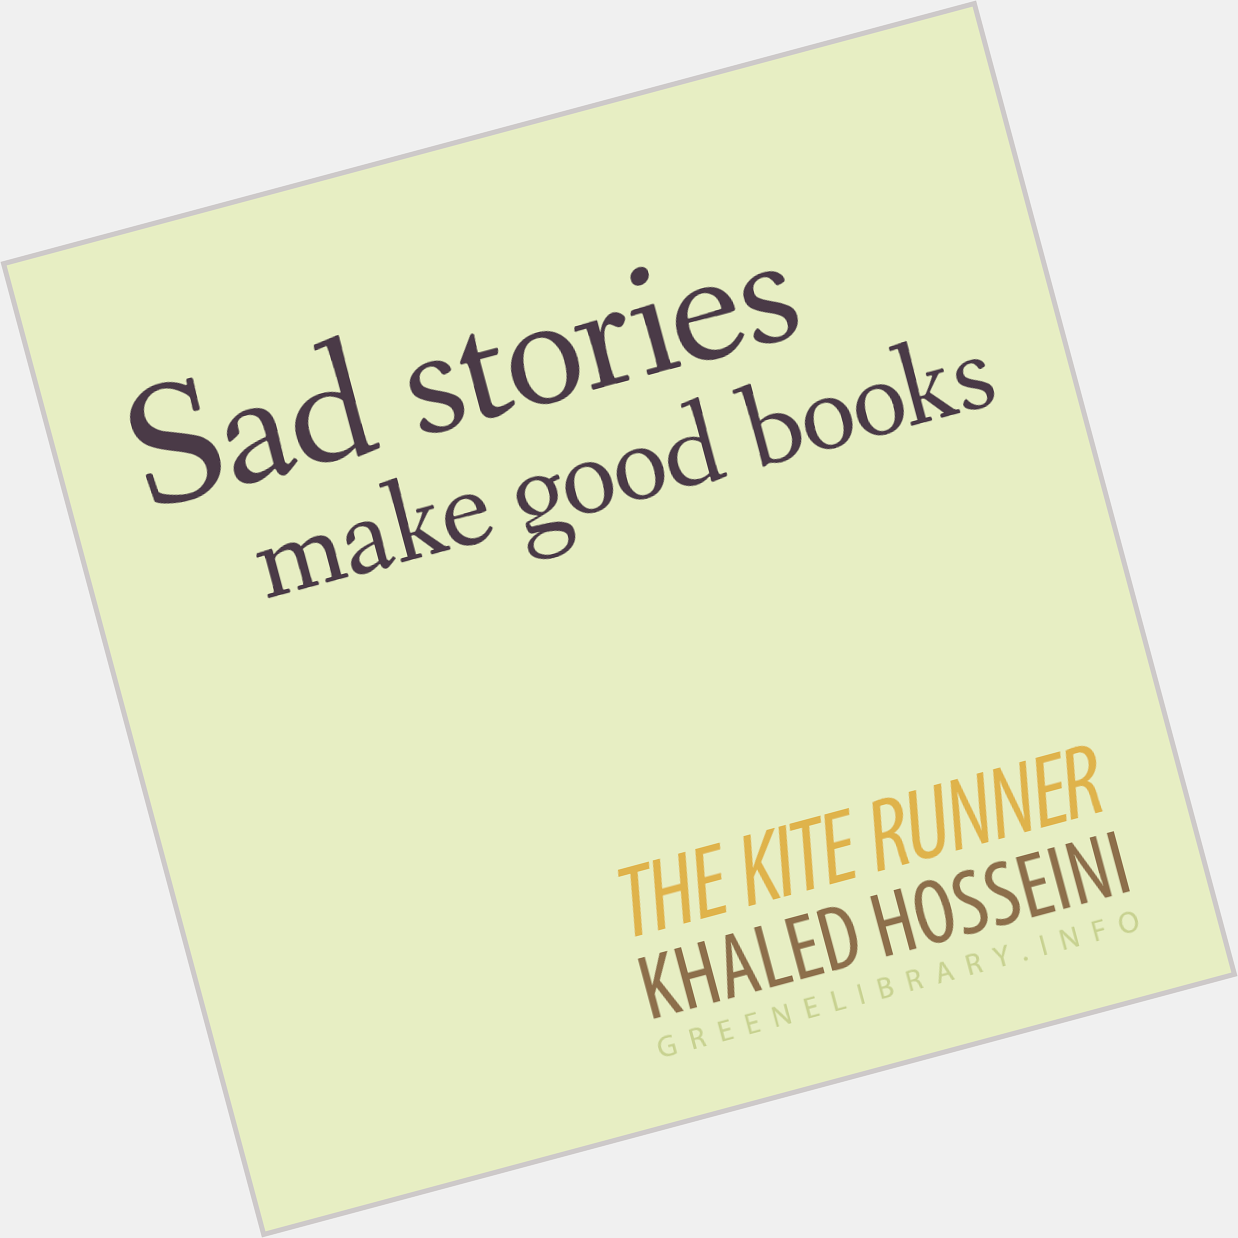 Happy birthday to author Khaled Hosseini. 